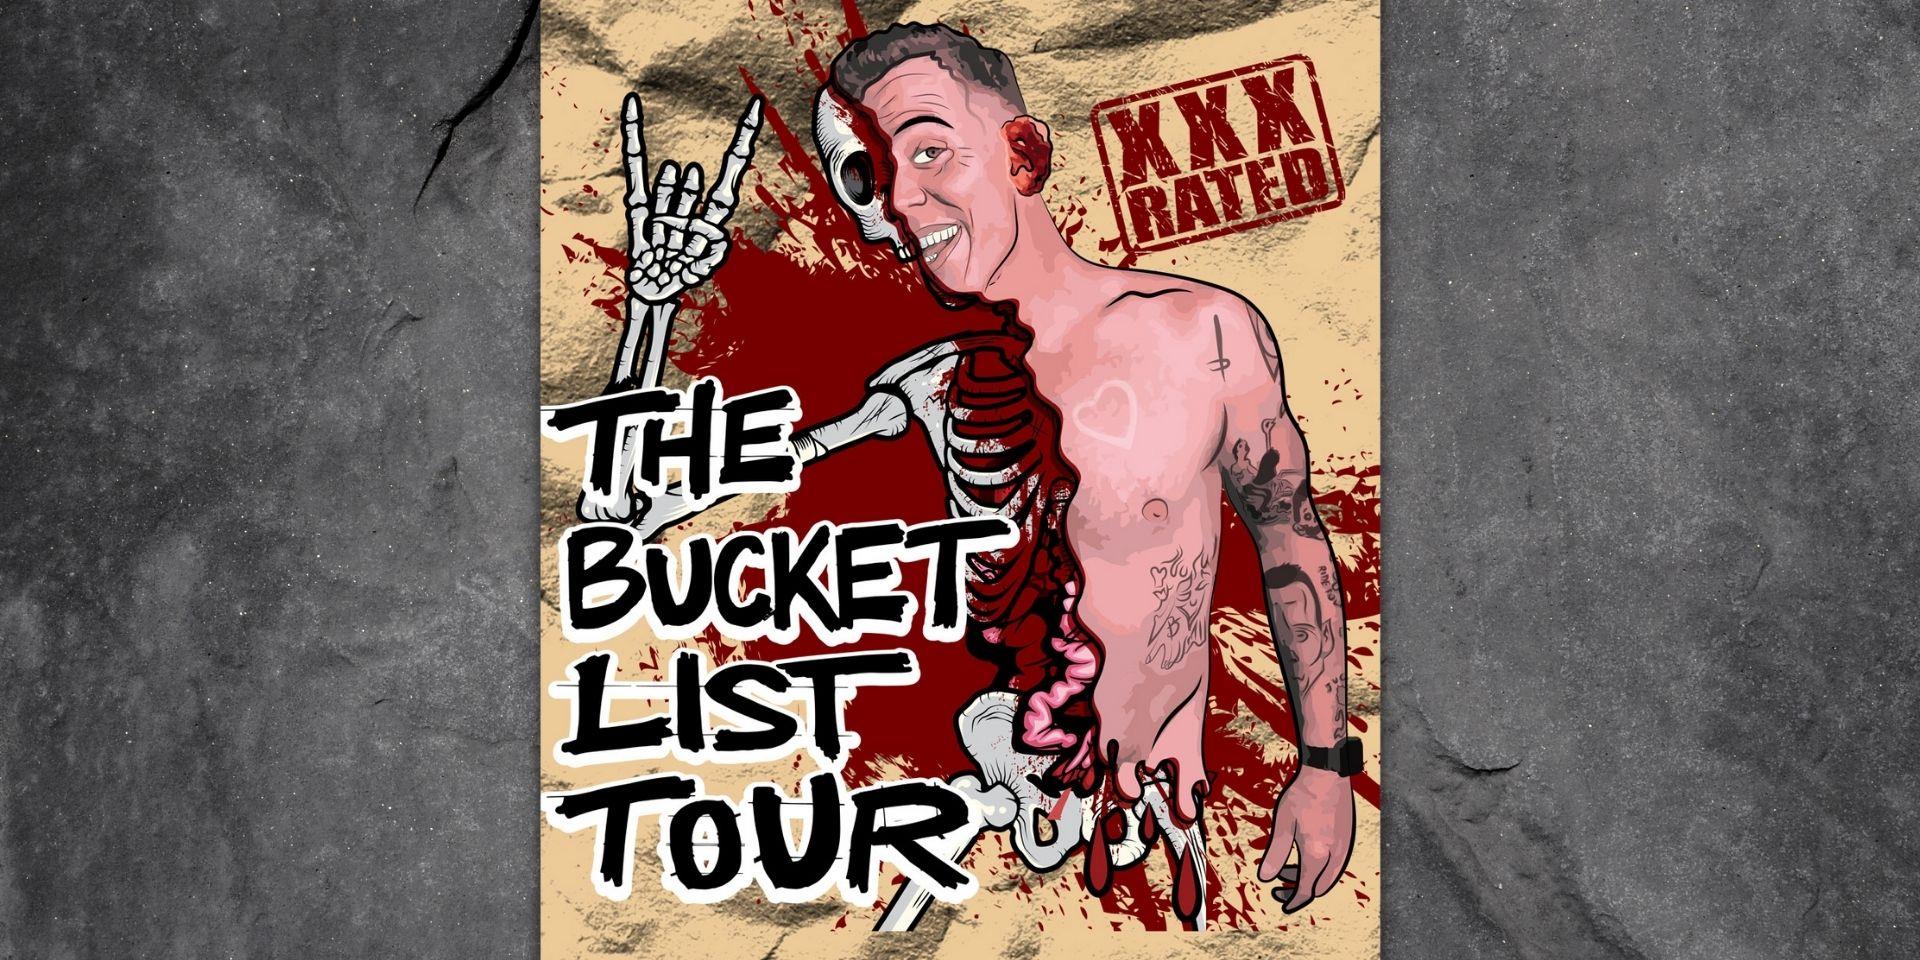 Steve-O: The Bucket List Tour - Outback Presents